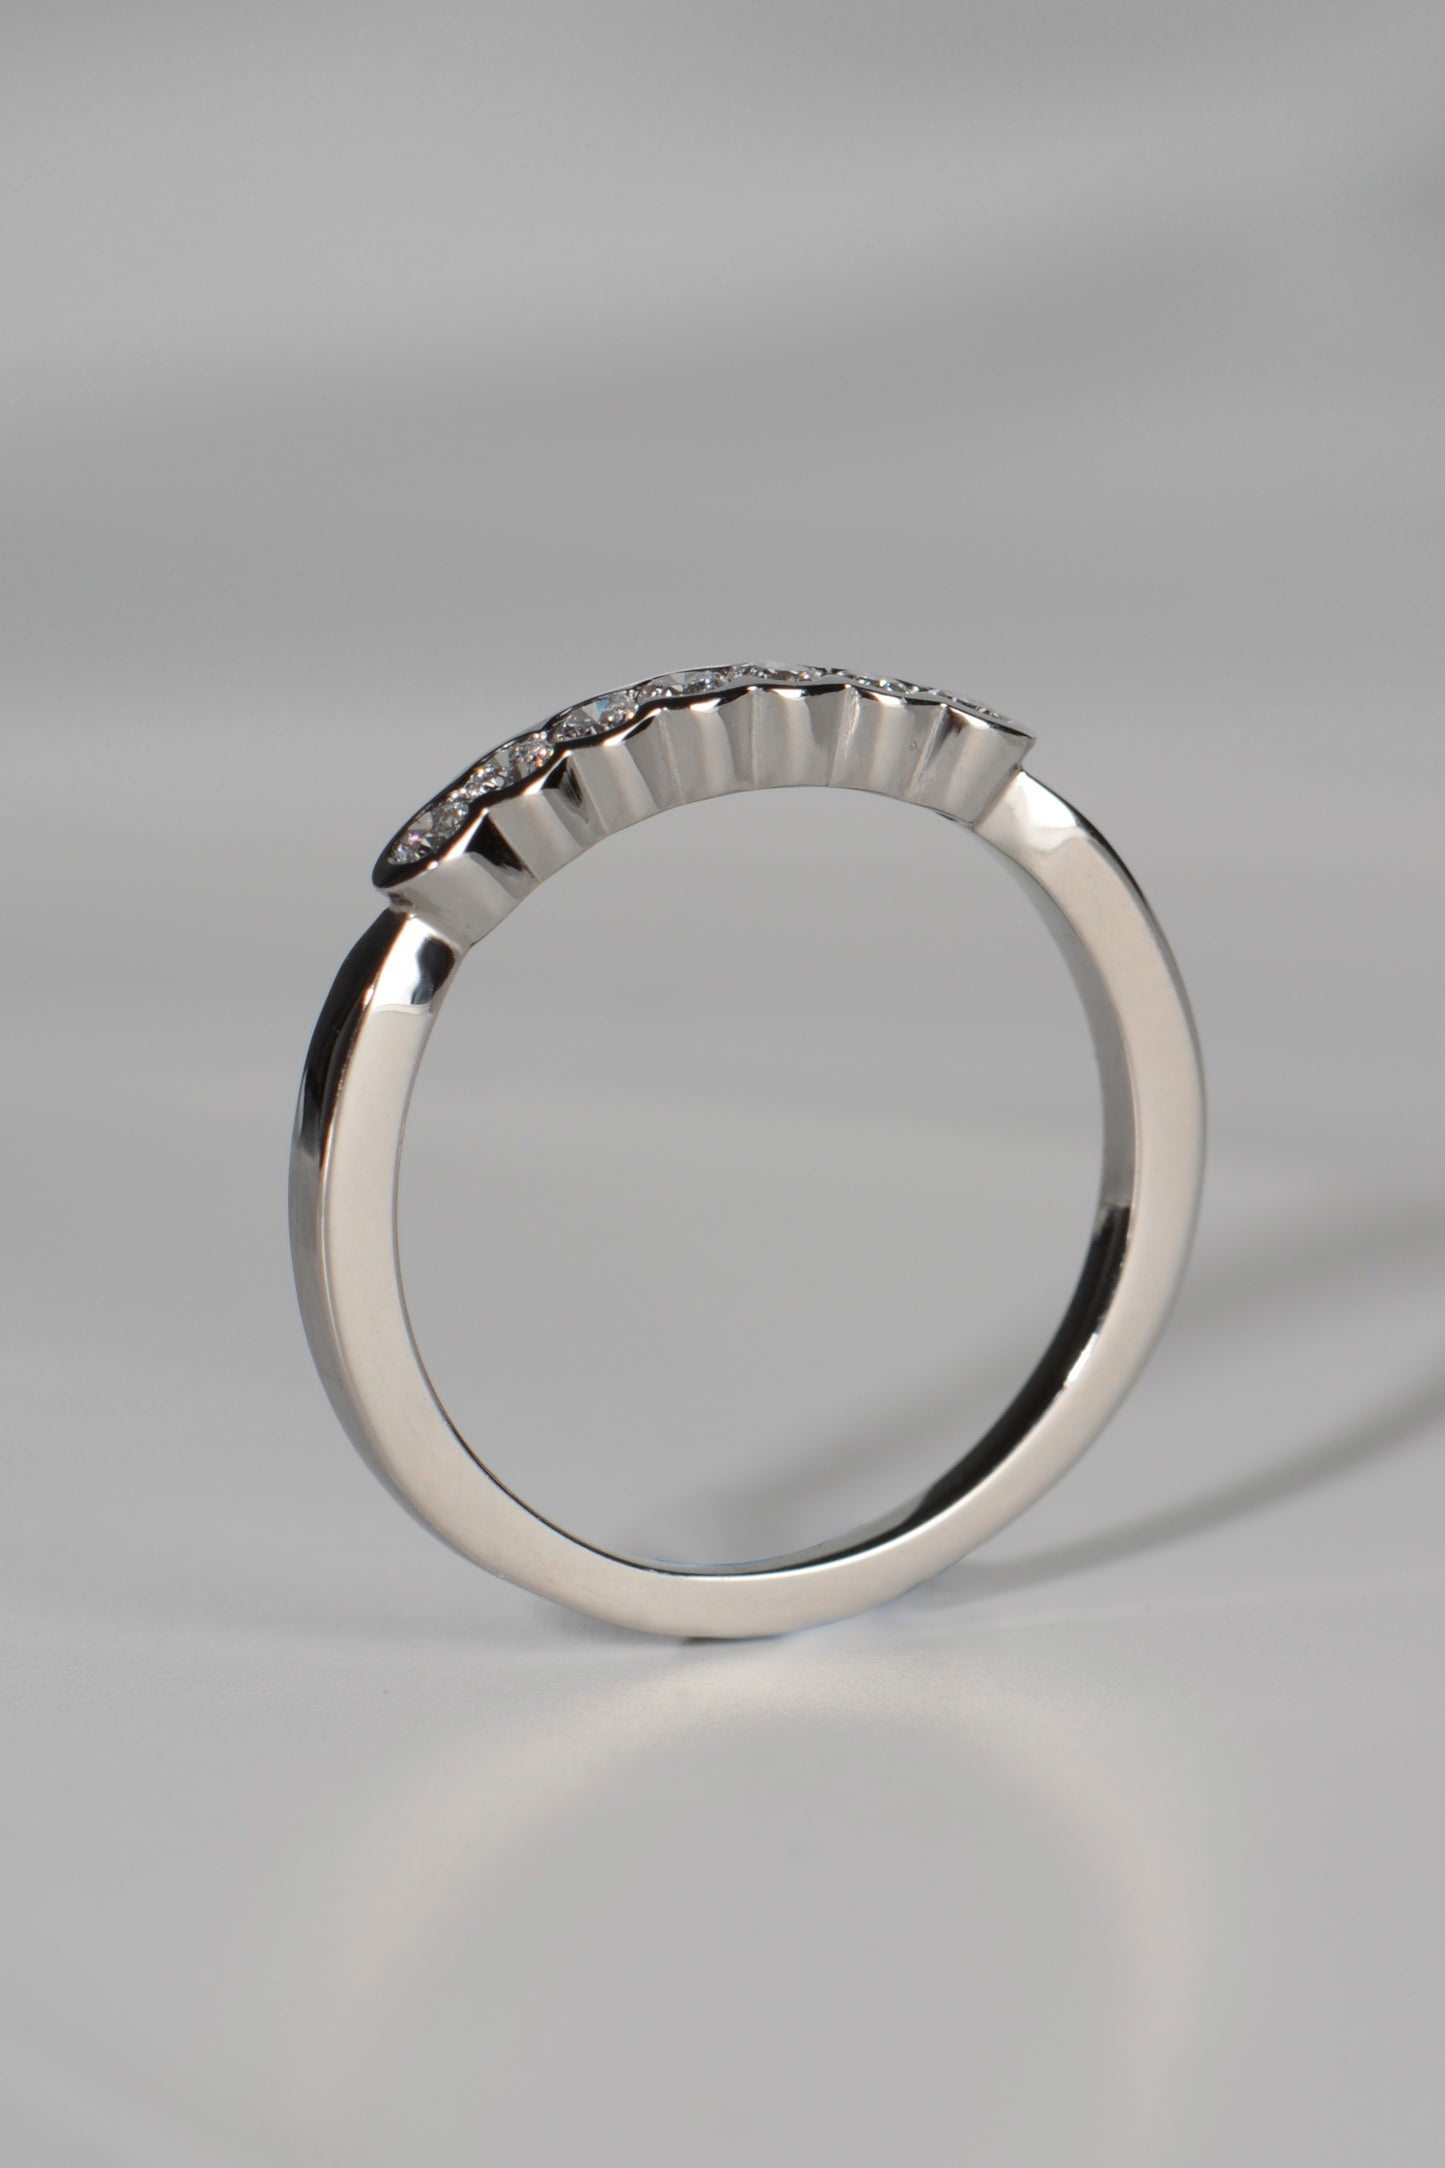 Narrow platinum diamond set wedding ring